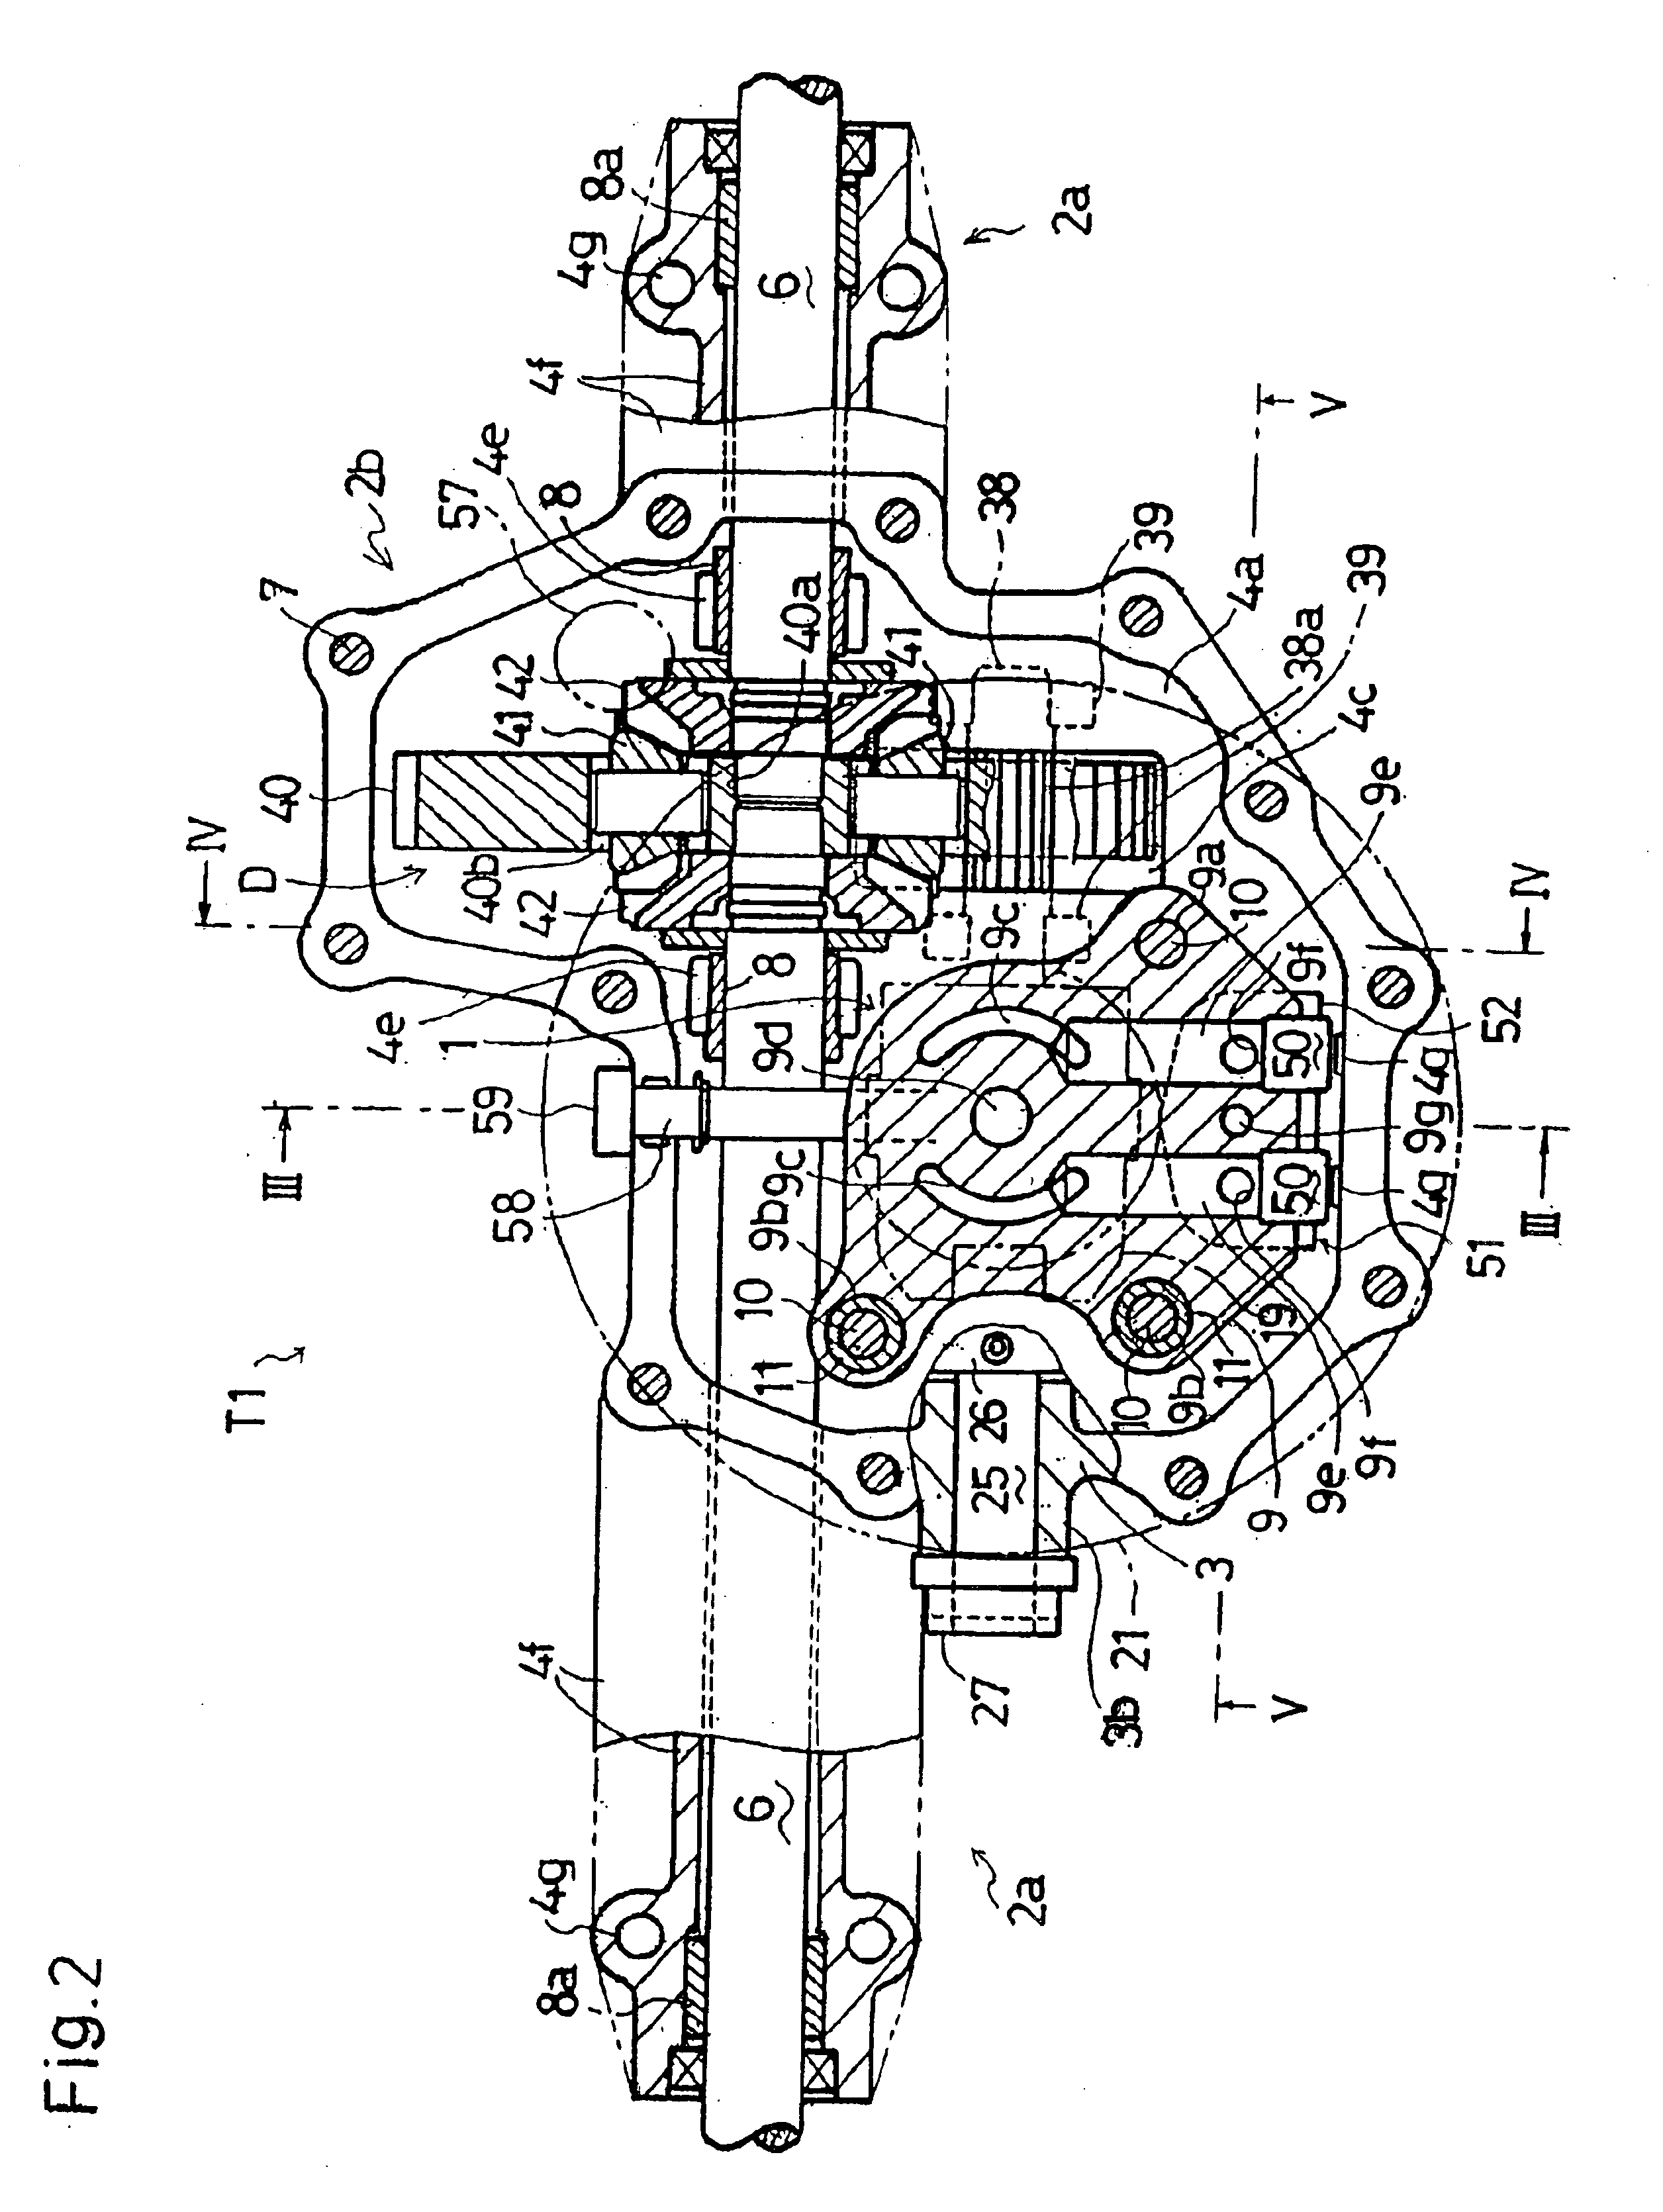 Hydrostatic transaxle apparatus